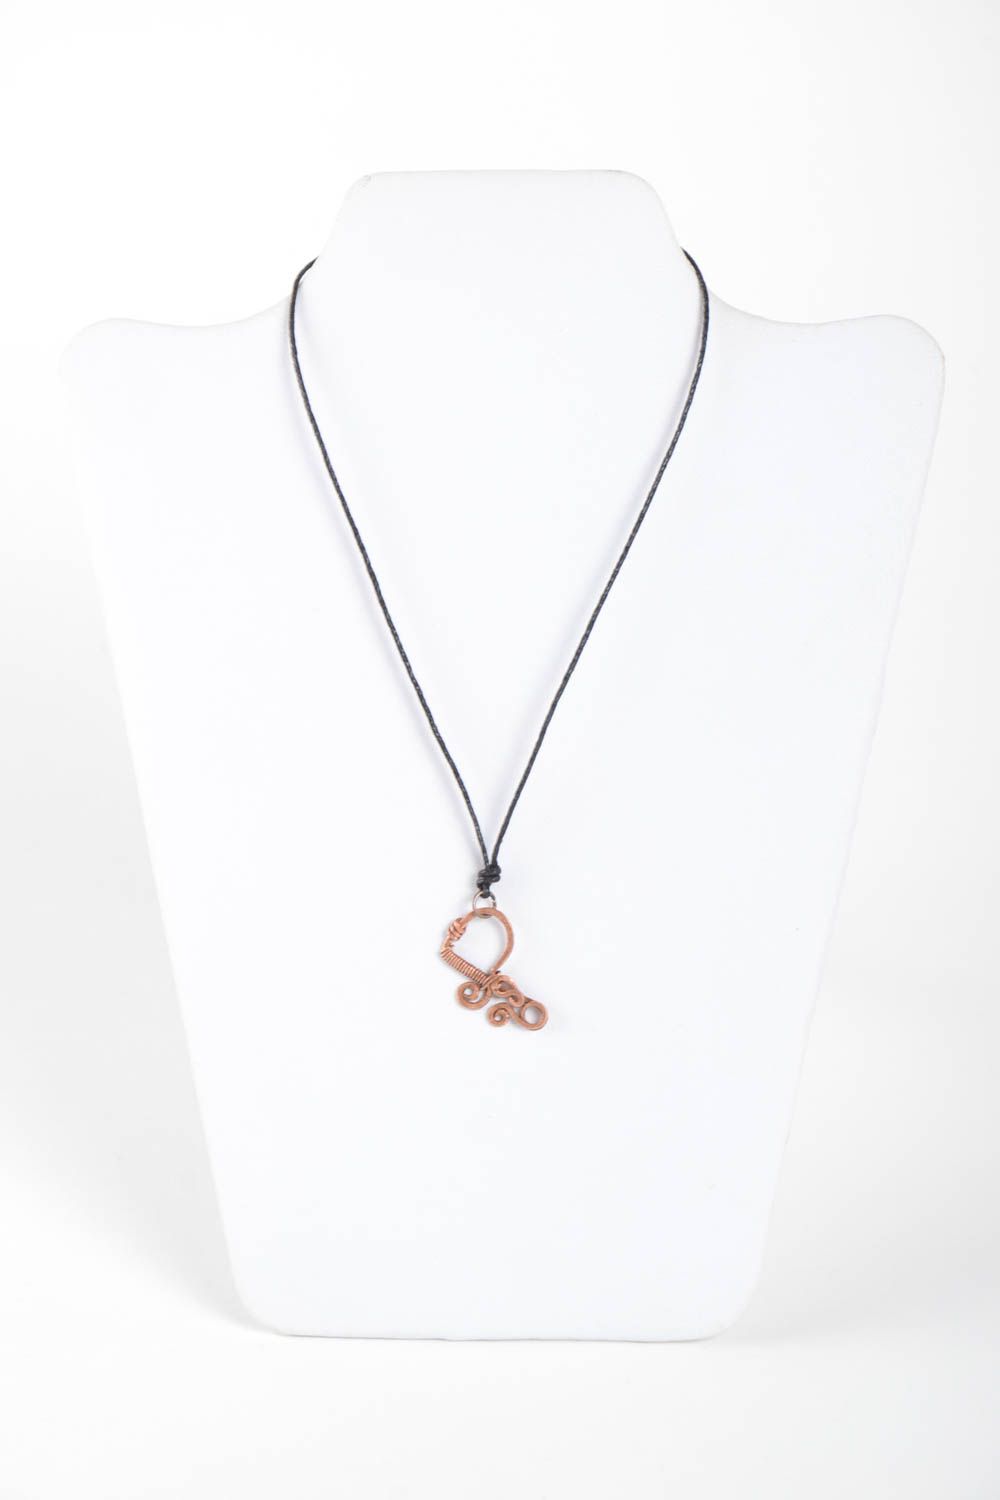 Handmade copper pendant copper jewelry wire wrap accessories for girls photo 2